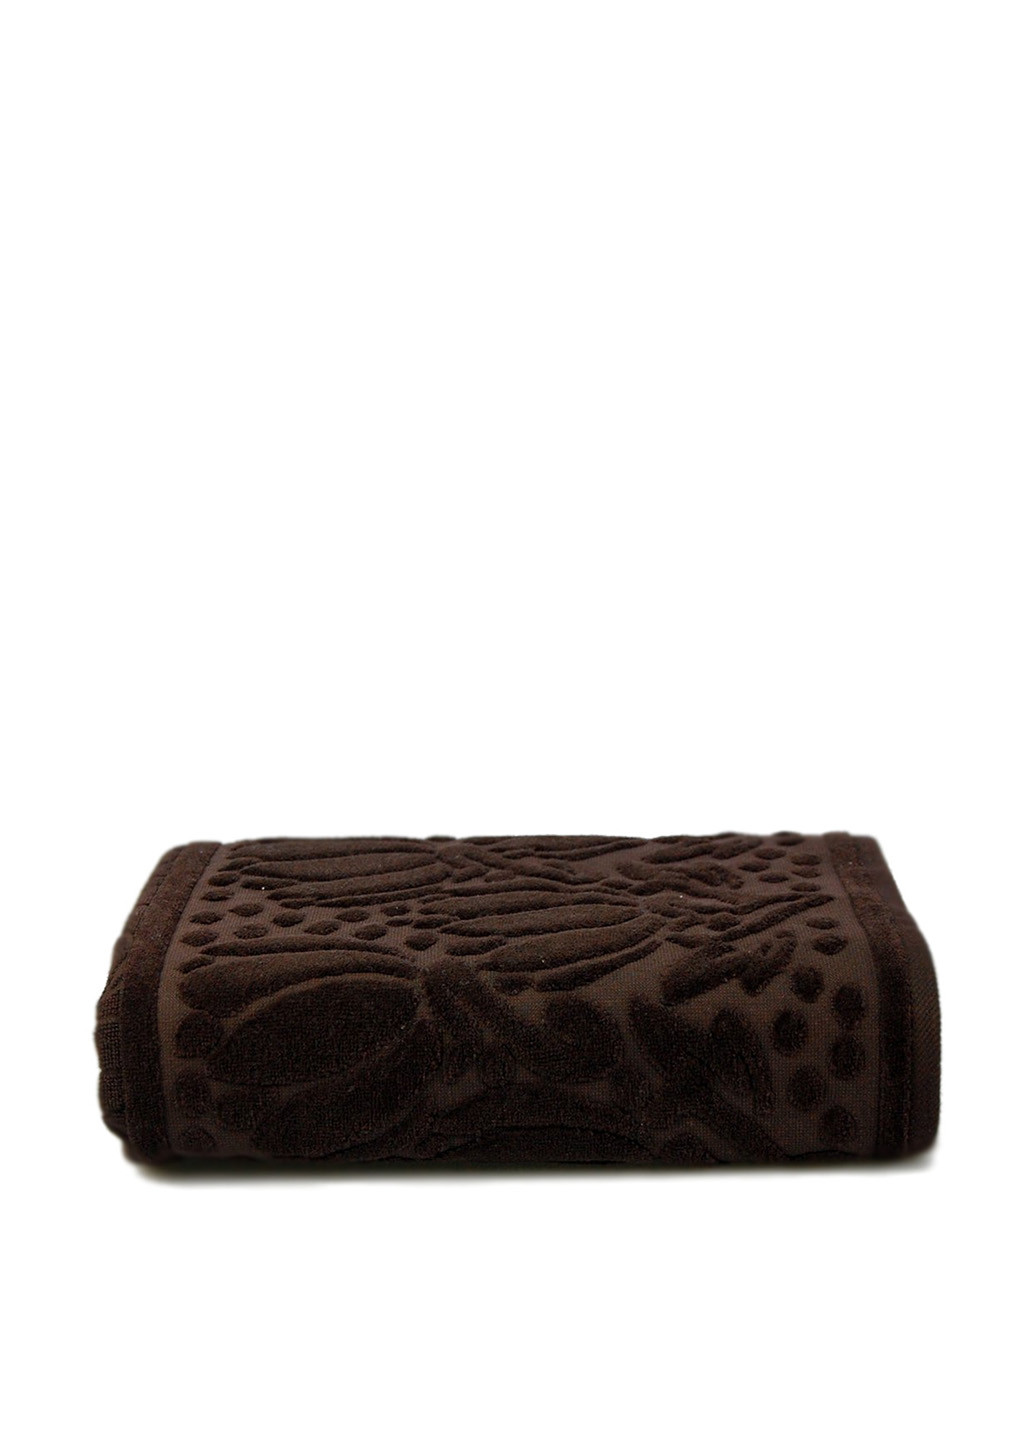 Shamrock полотенце, 70х140 см однотонный коричневый производство - Турция